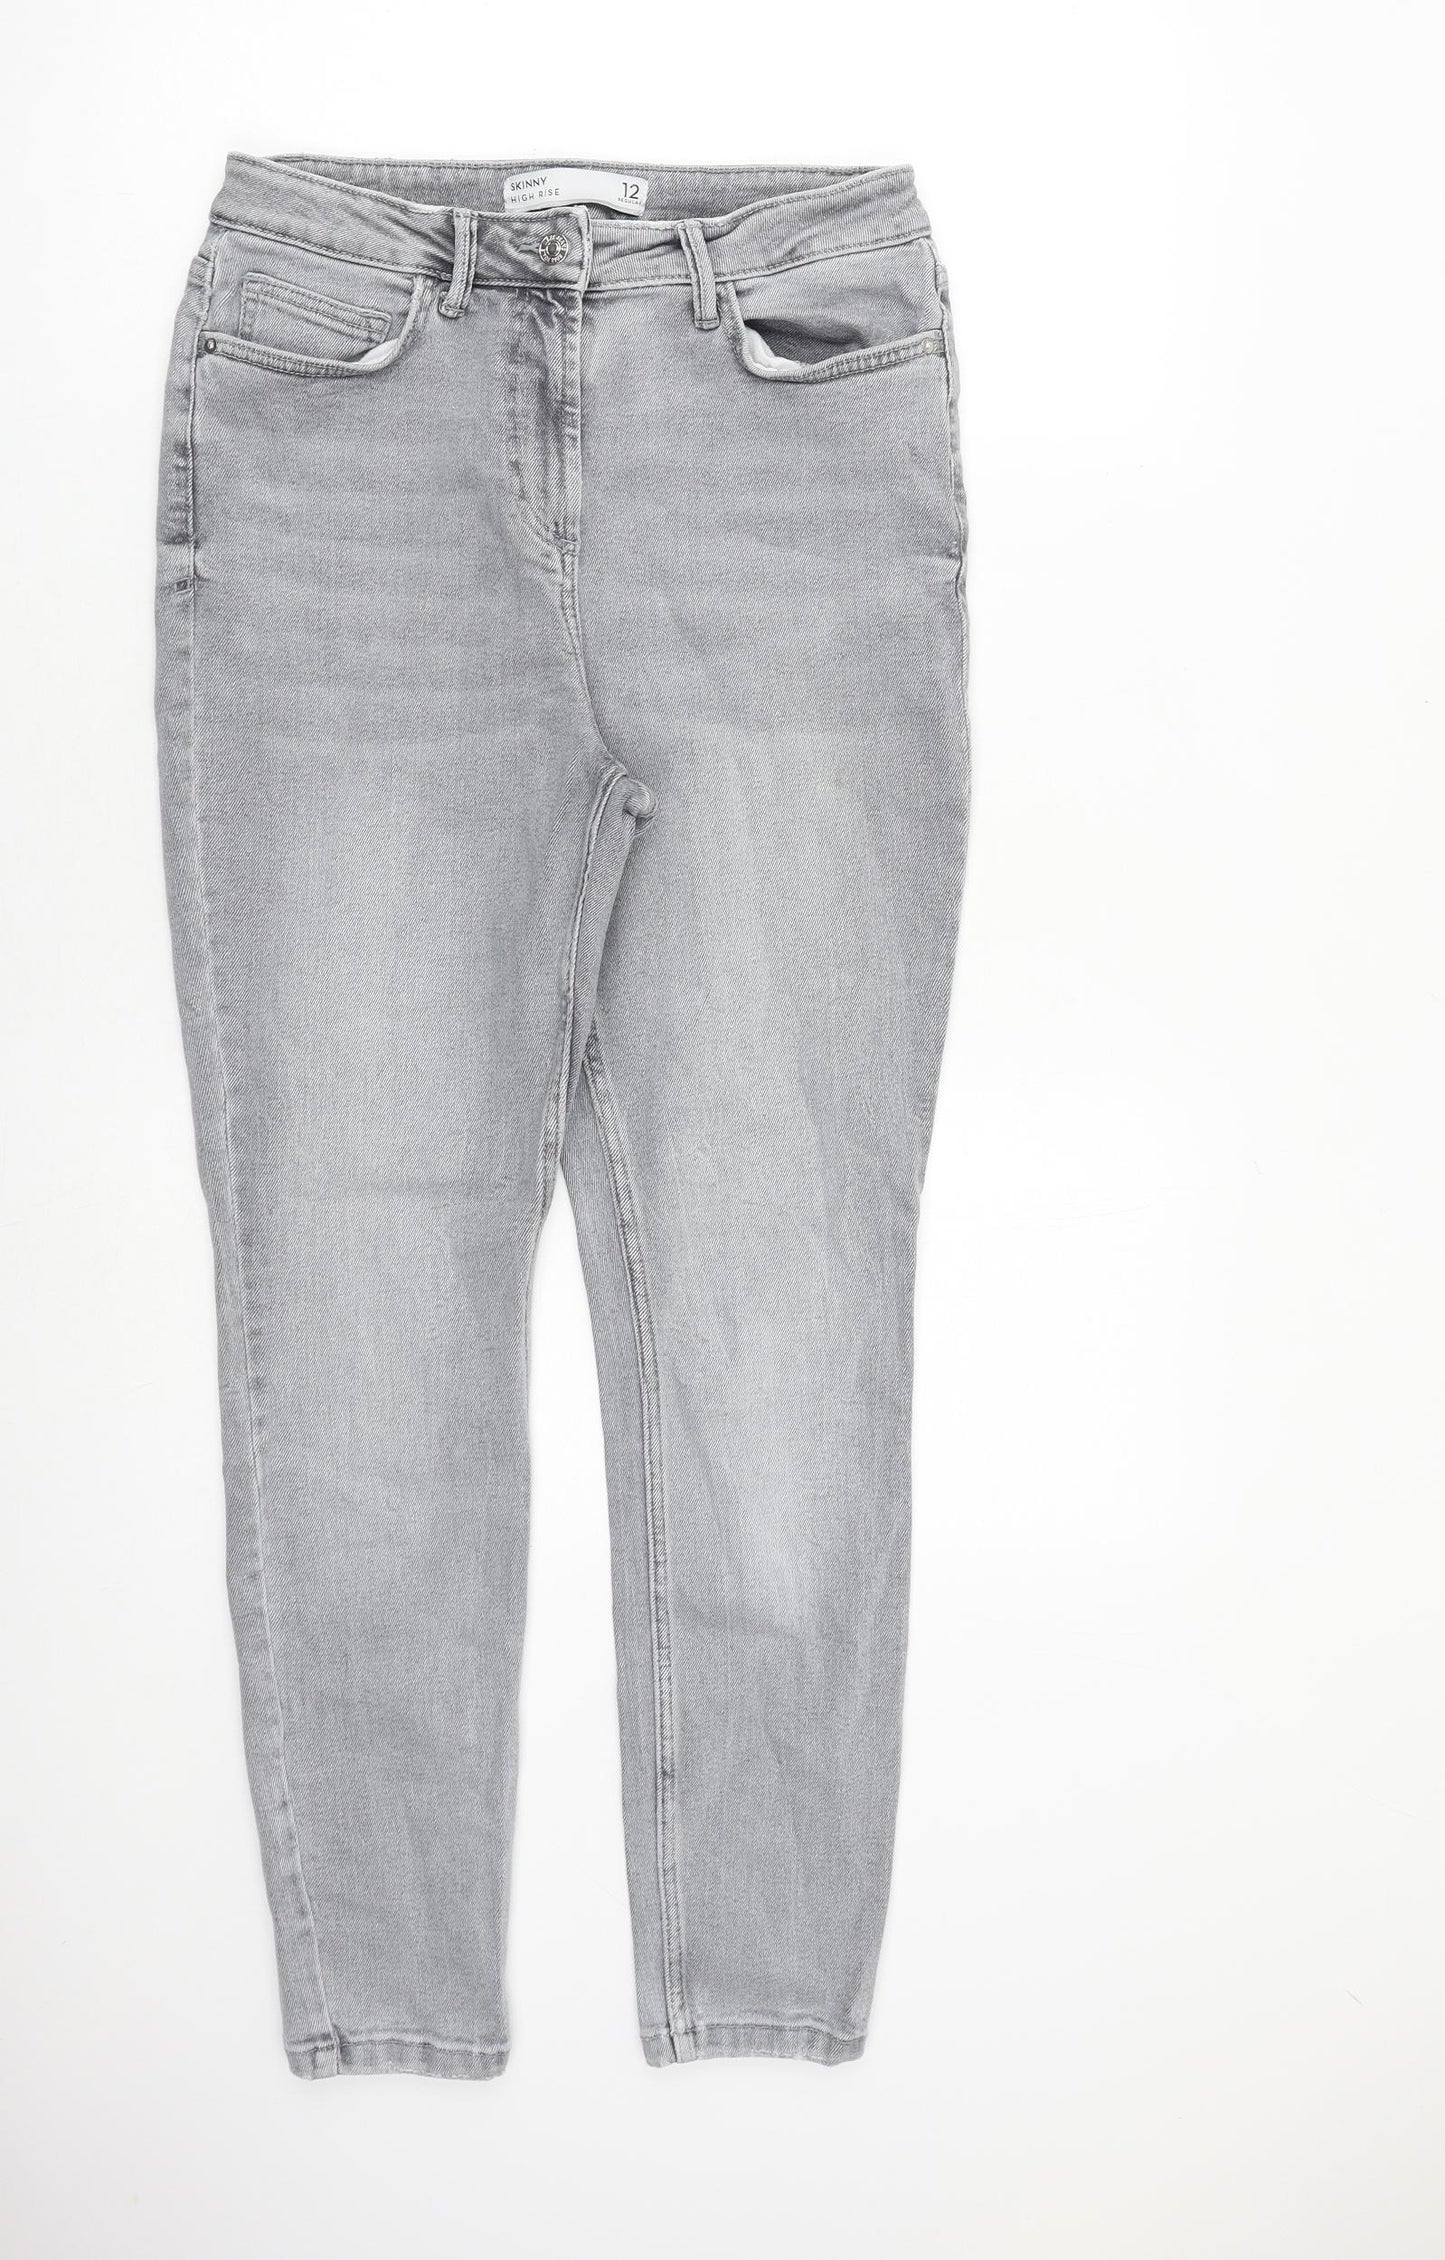 NEXT Womens Grey Cotton Skinny Jeans Size 12 L28 in Slim Zip